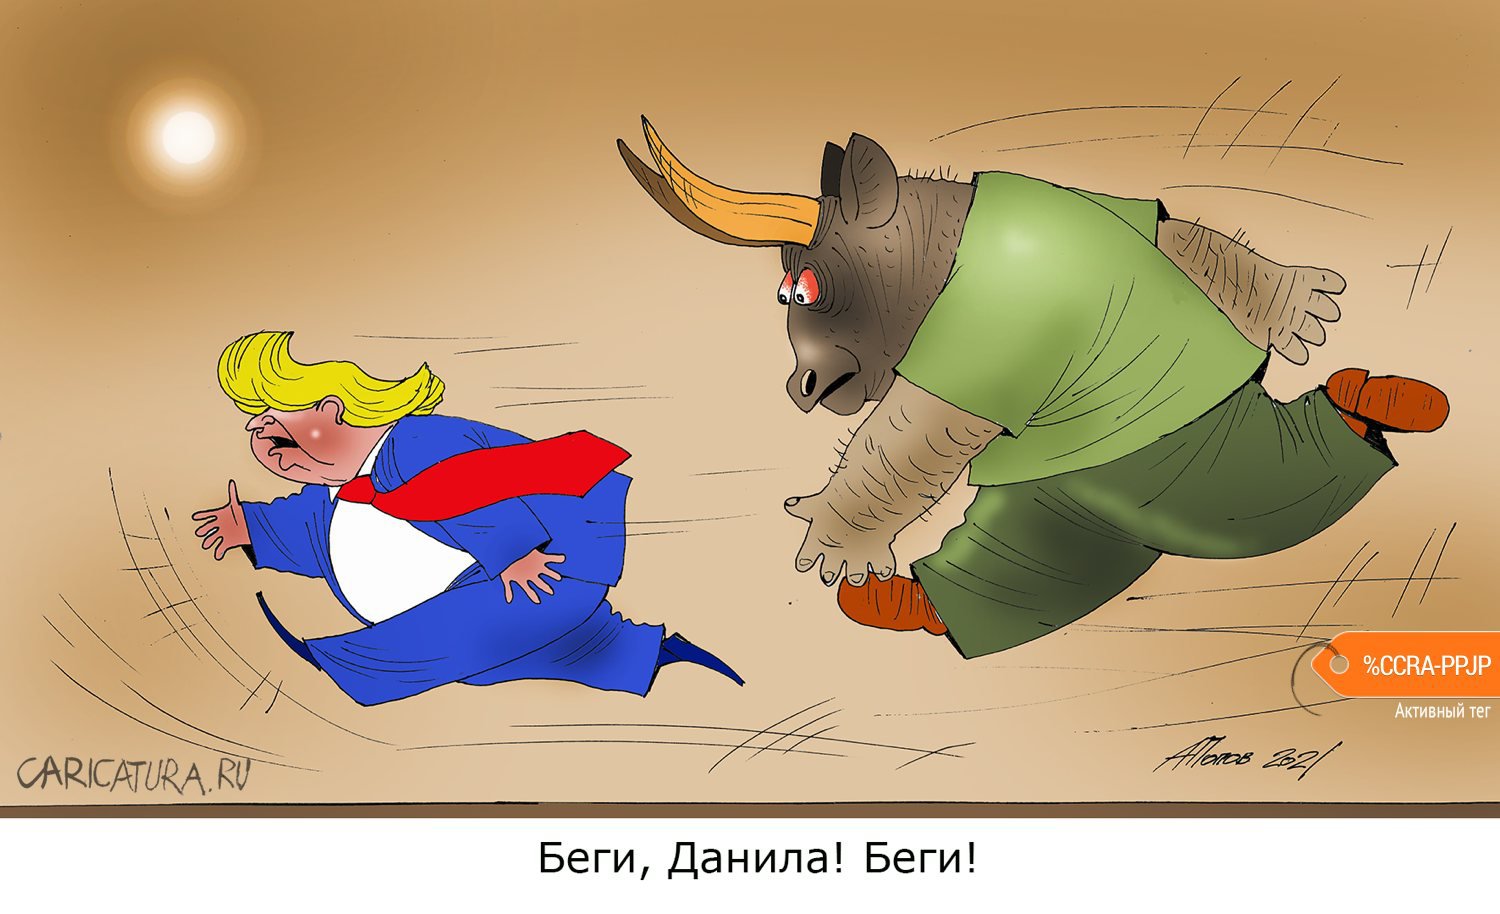 Карикатура "А ну погоди, Крыса!", Александр Попов